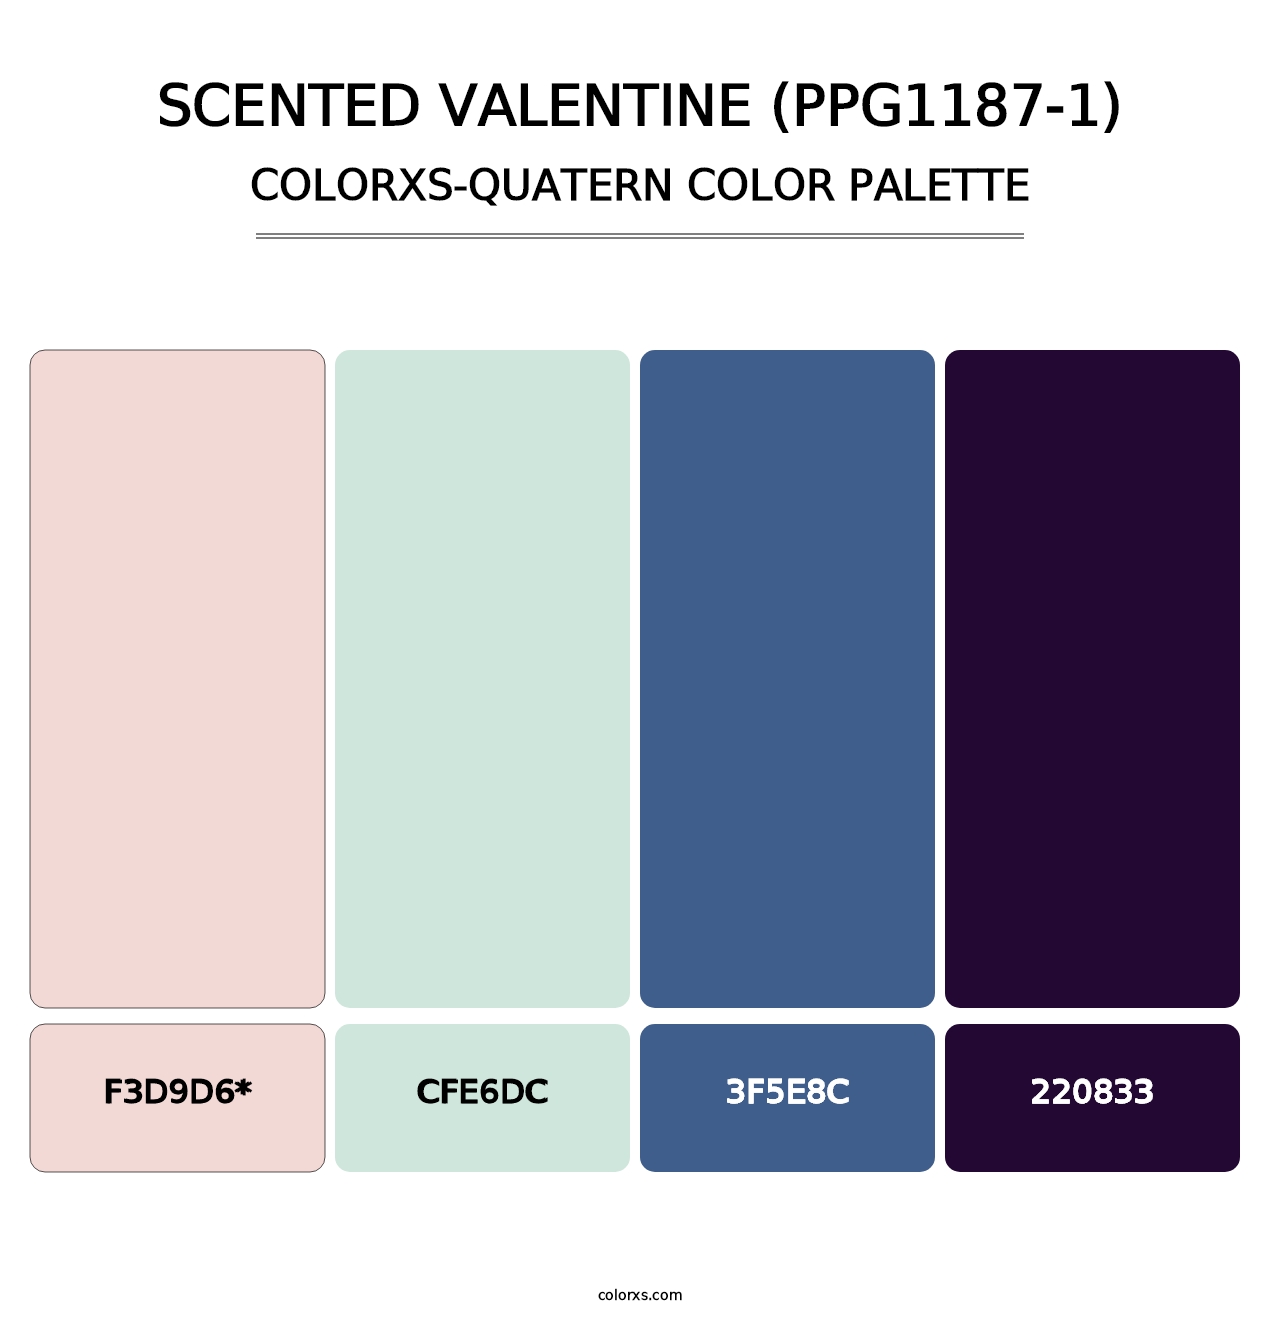 Scented Valentine (PPG1187-1) - Colorxs Quatern Palette